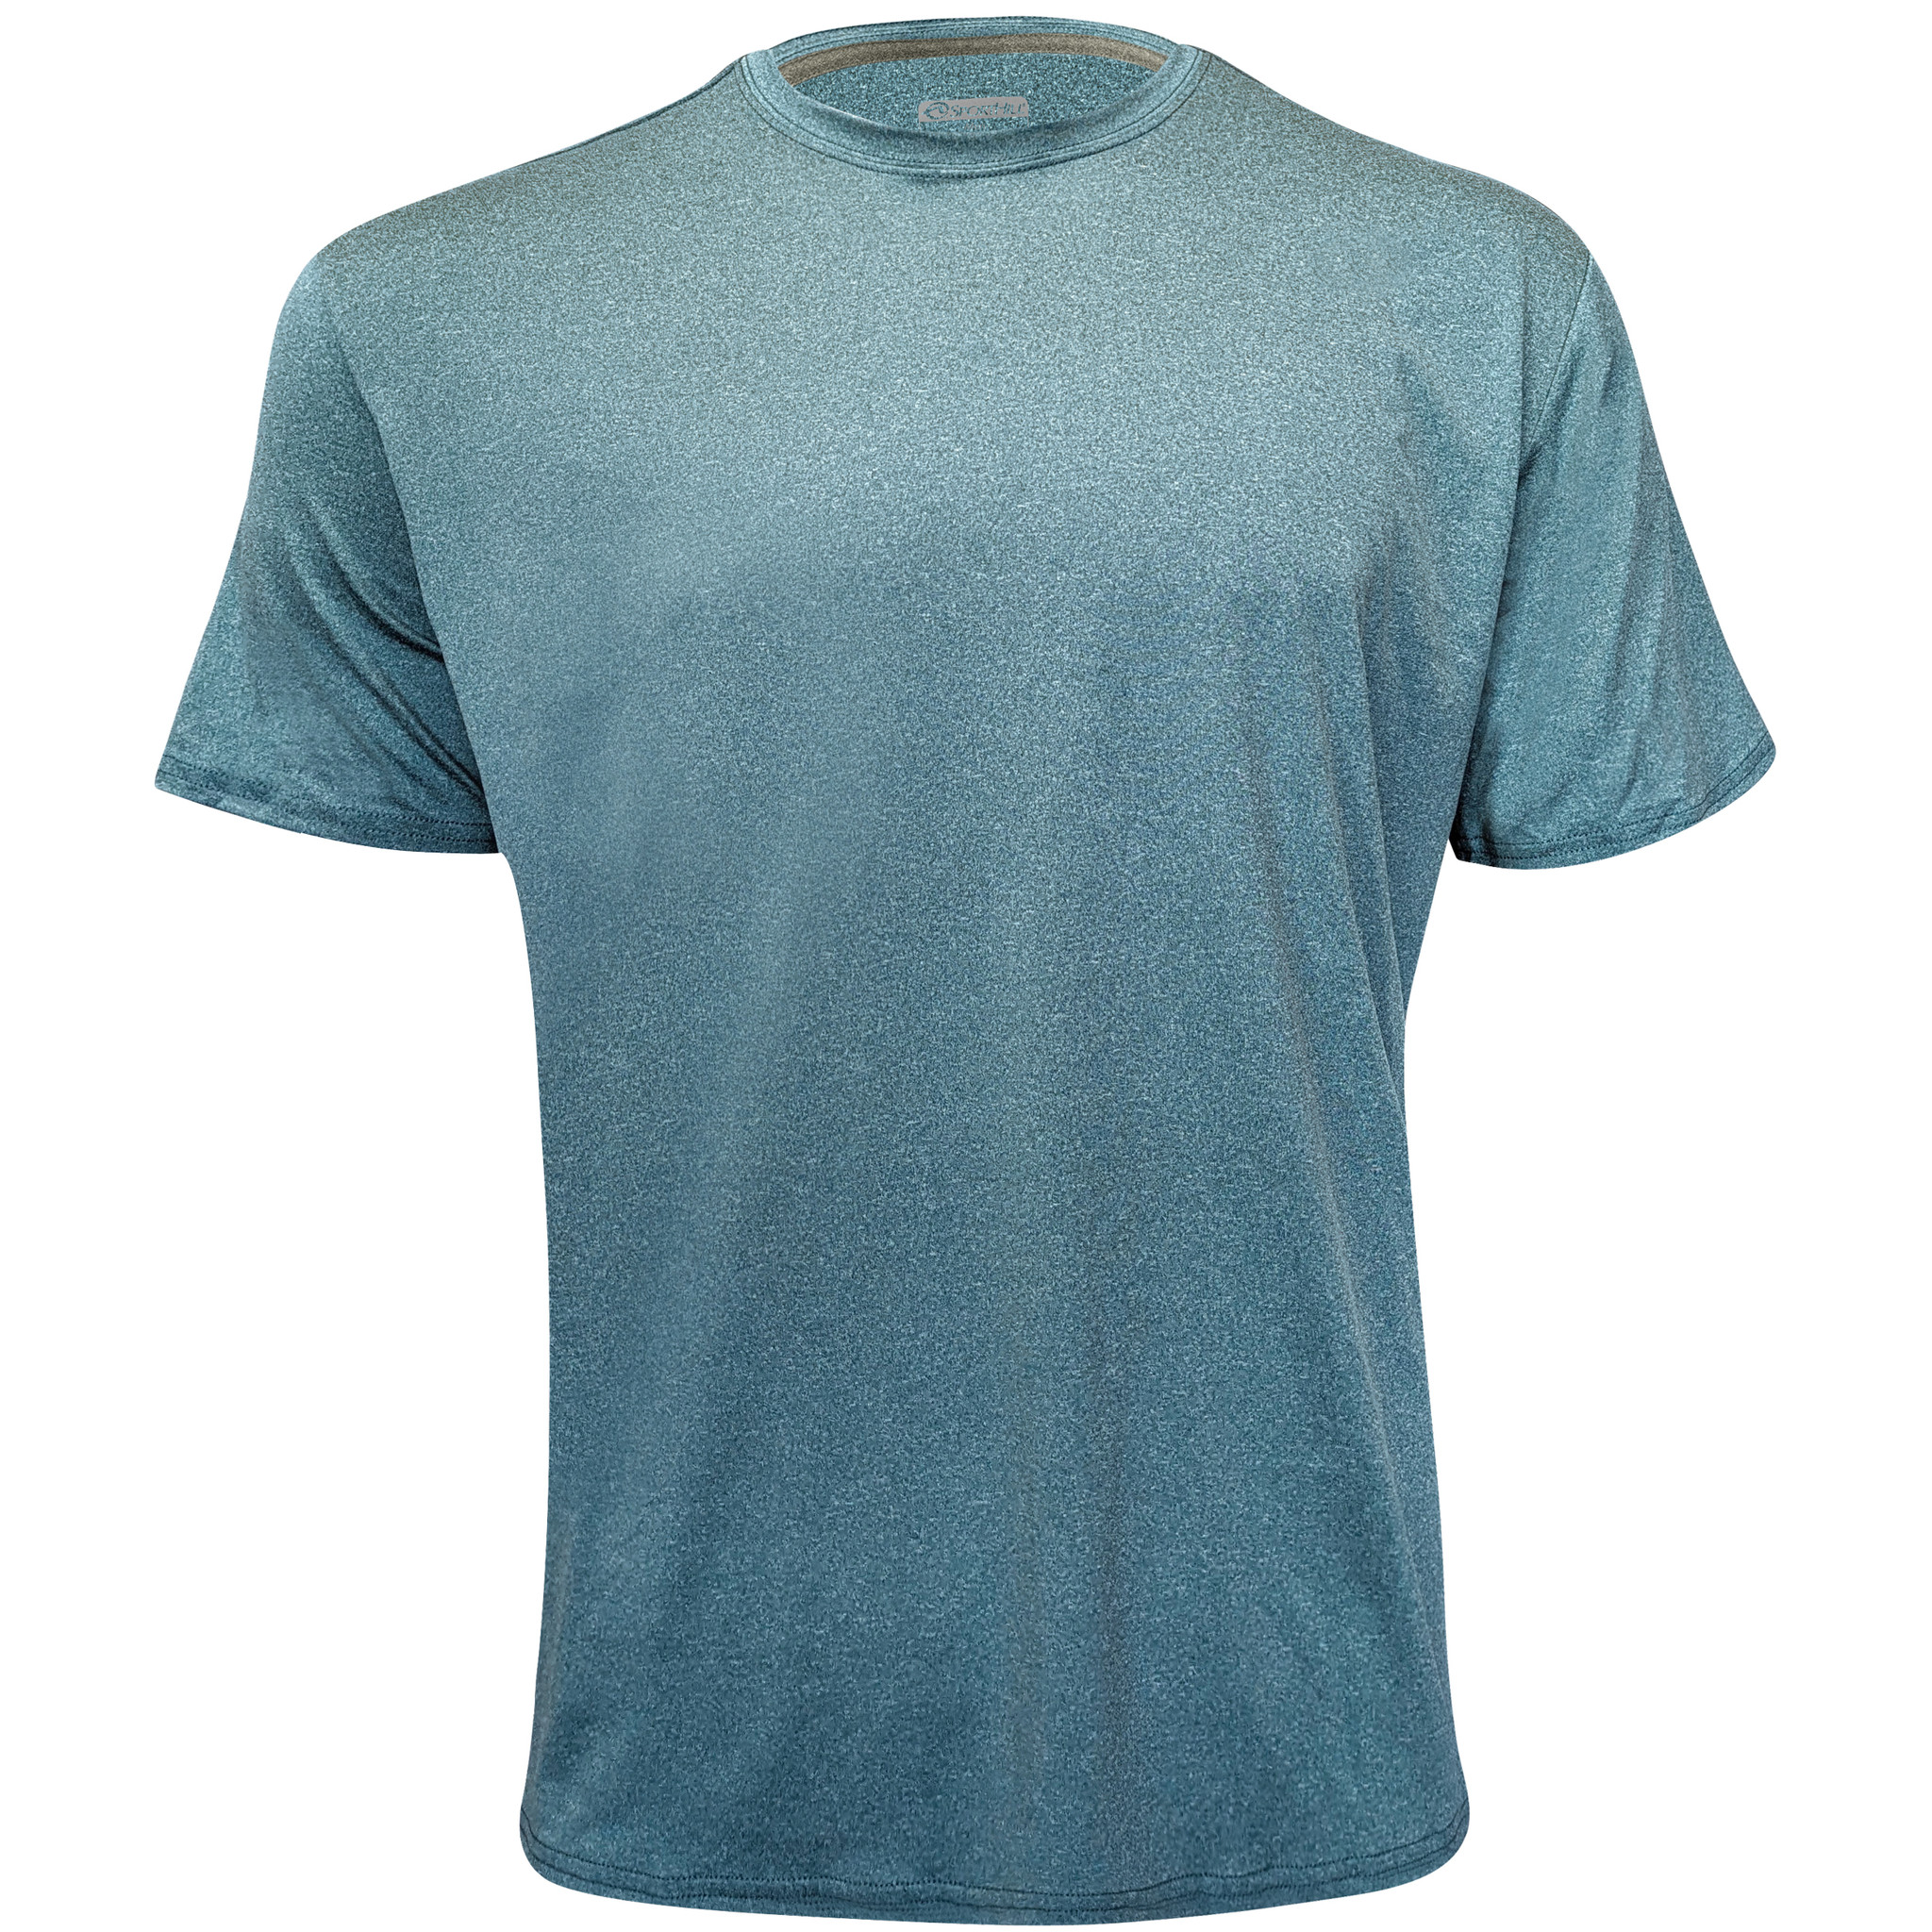 Sportsman Men's Short Sleeve Thermal Top - Schreter's Clothing Store